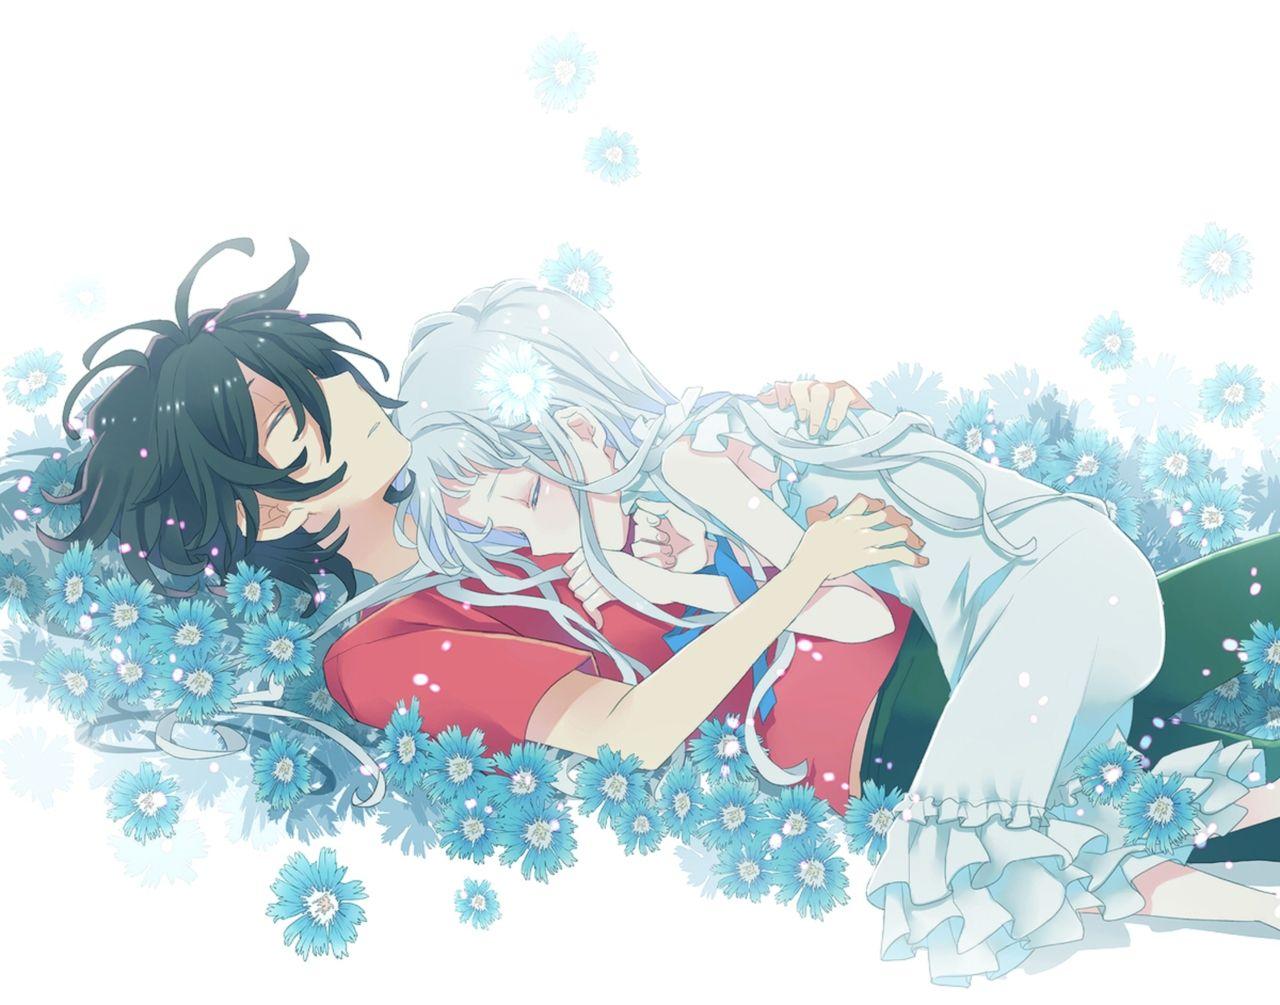 Wallpaper lying down, bed, anime girl desktop wallpaper, hd image, picture,  background, 201447 | wallpapersmug